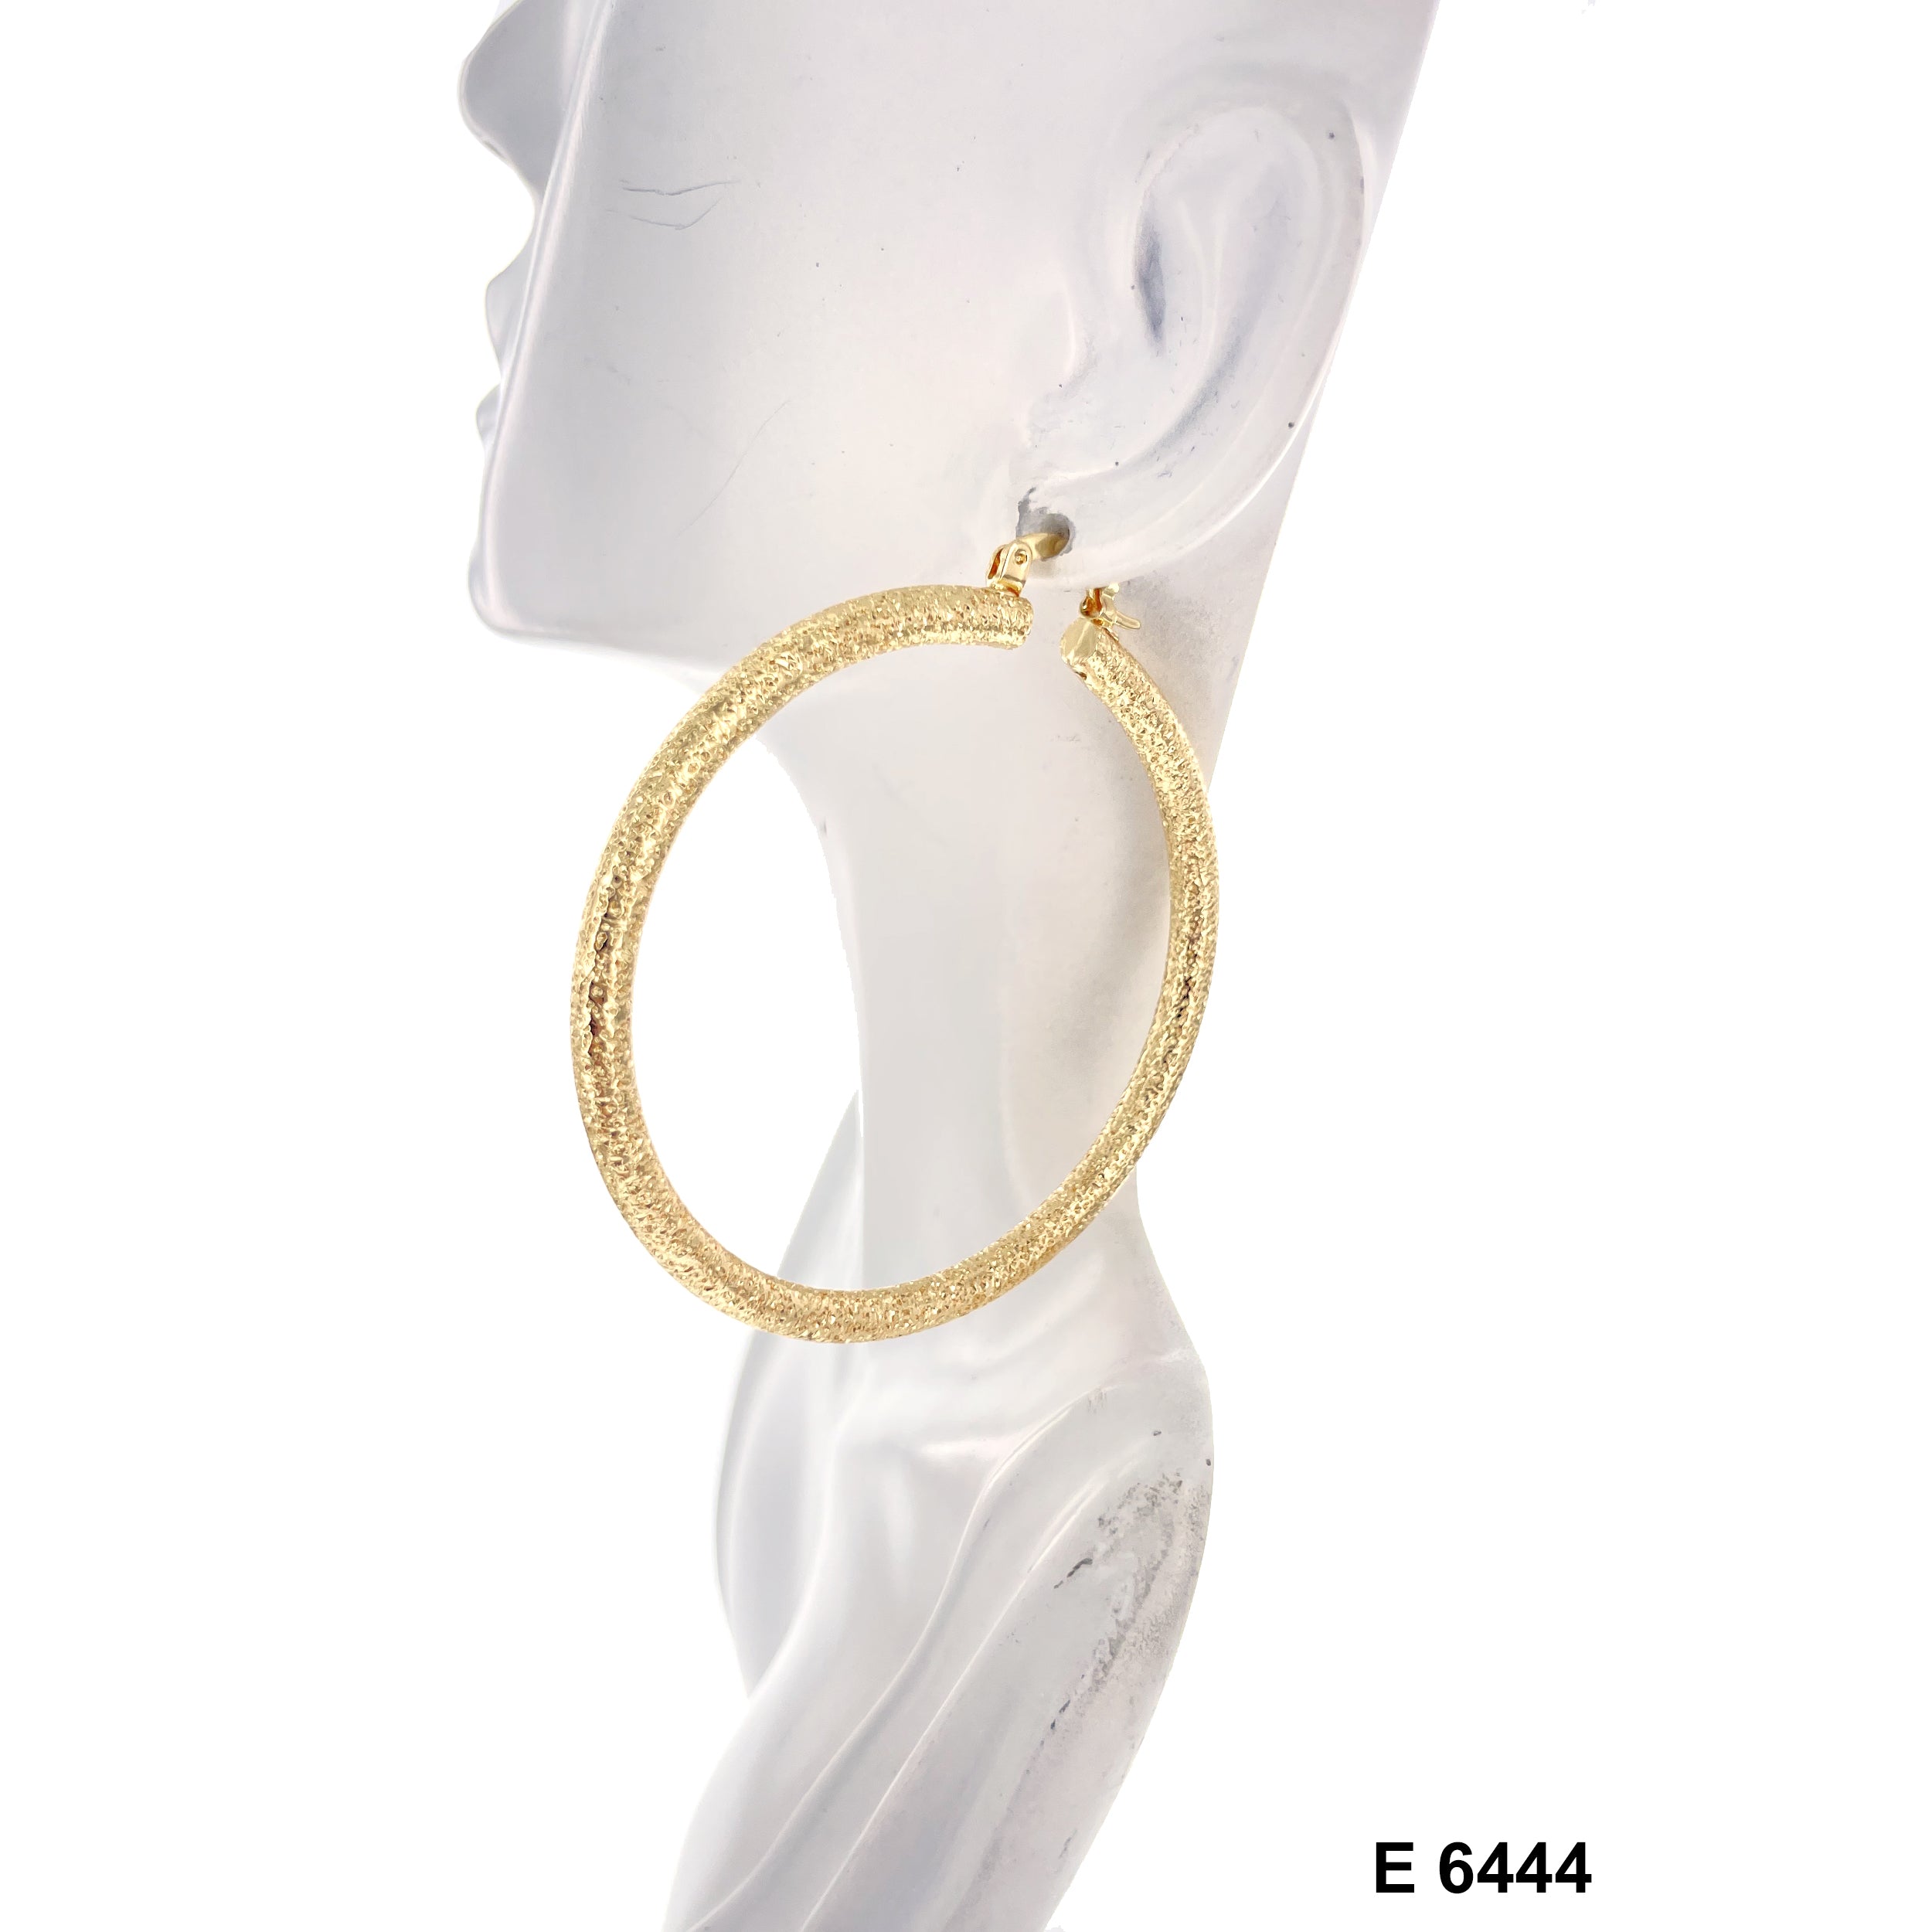 Engraved Hoop Earrings E 6444